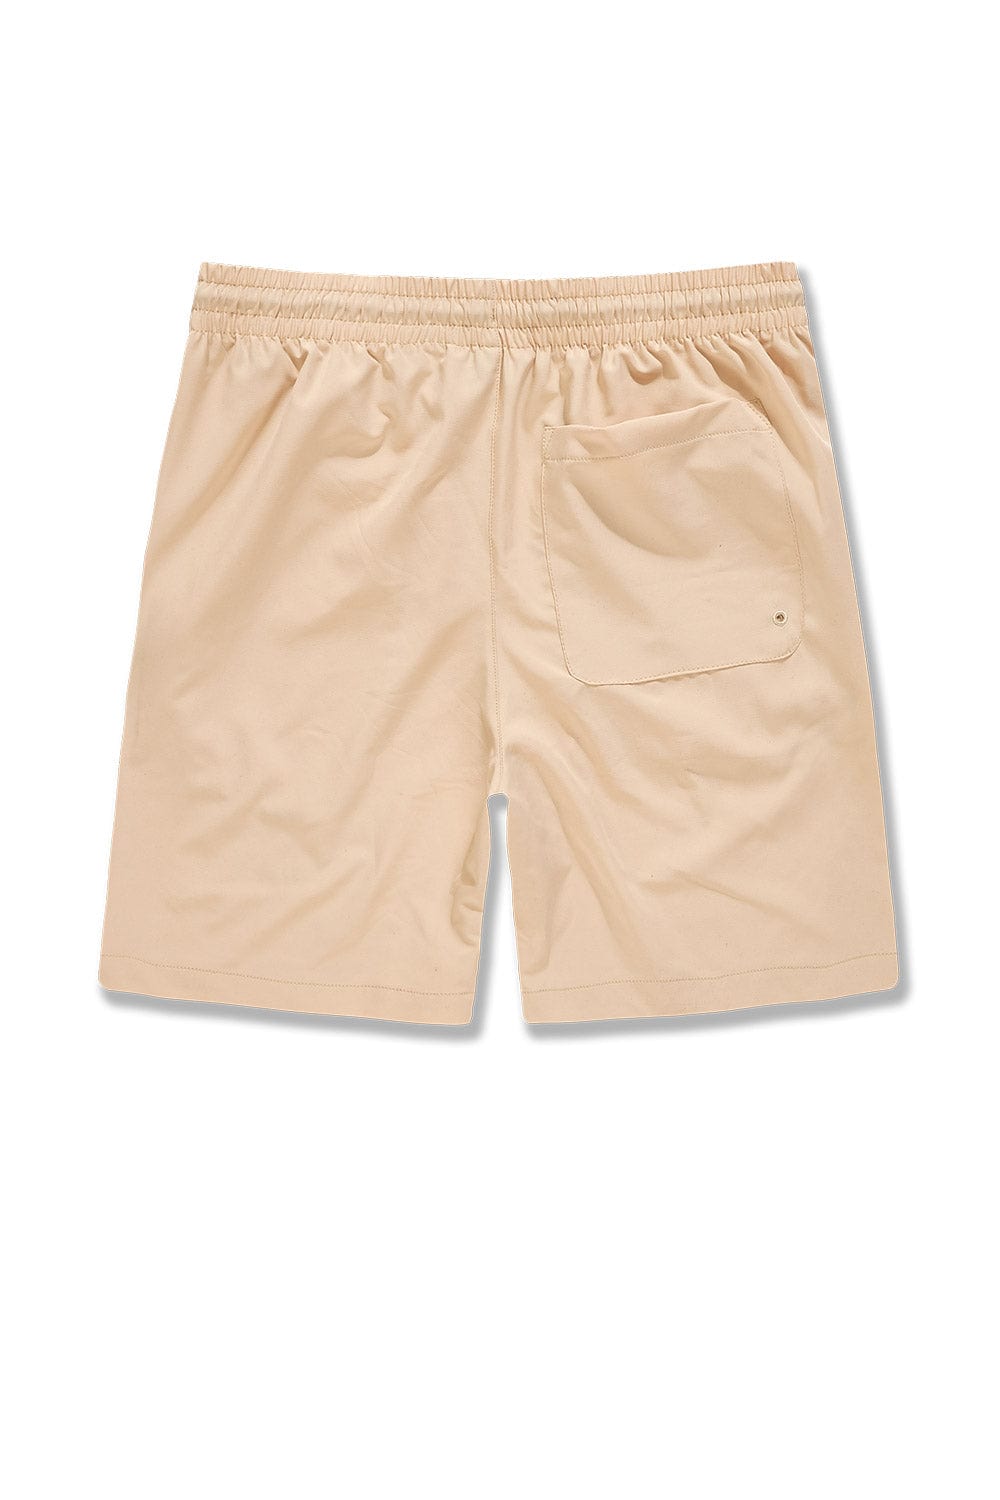 Jordan Craig Retro - Bay Area Shorts (Desert)